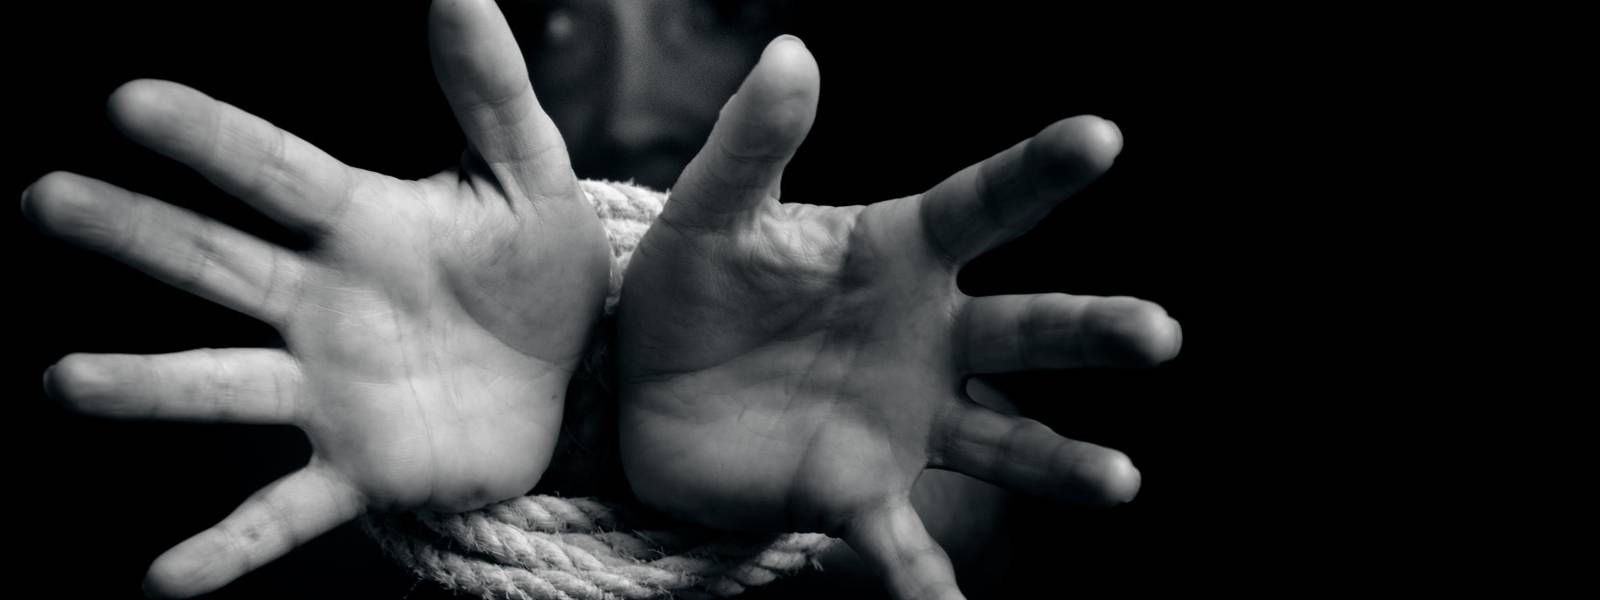 Oman human trafficking: CID team deployed to the UAE